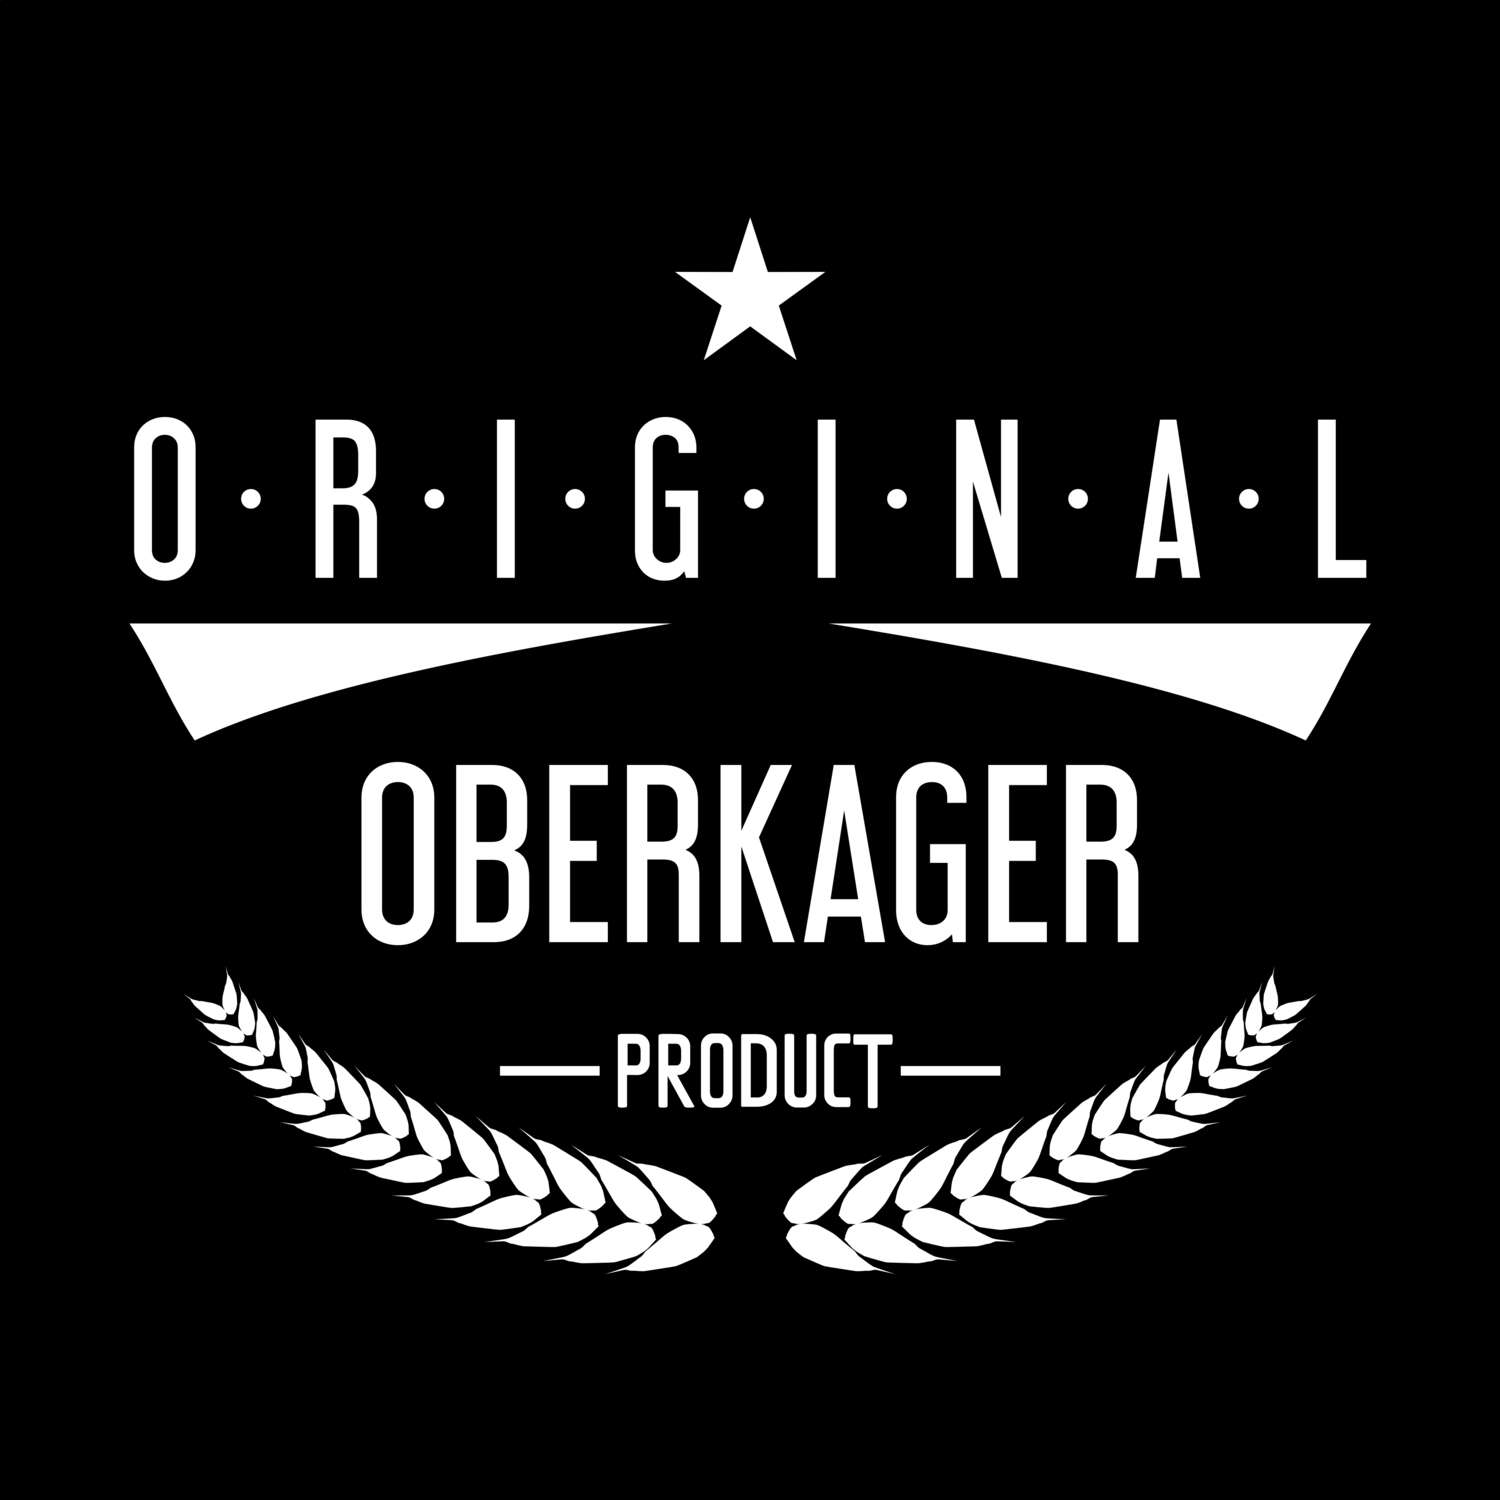 Oberkager T-Shirt »Original Product«